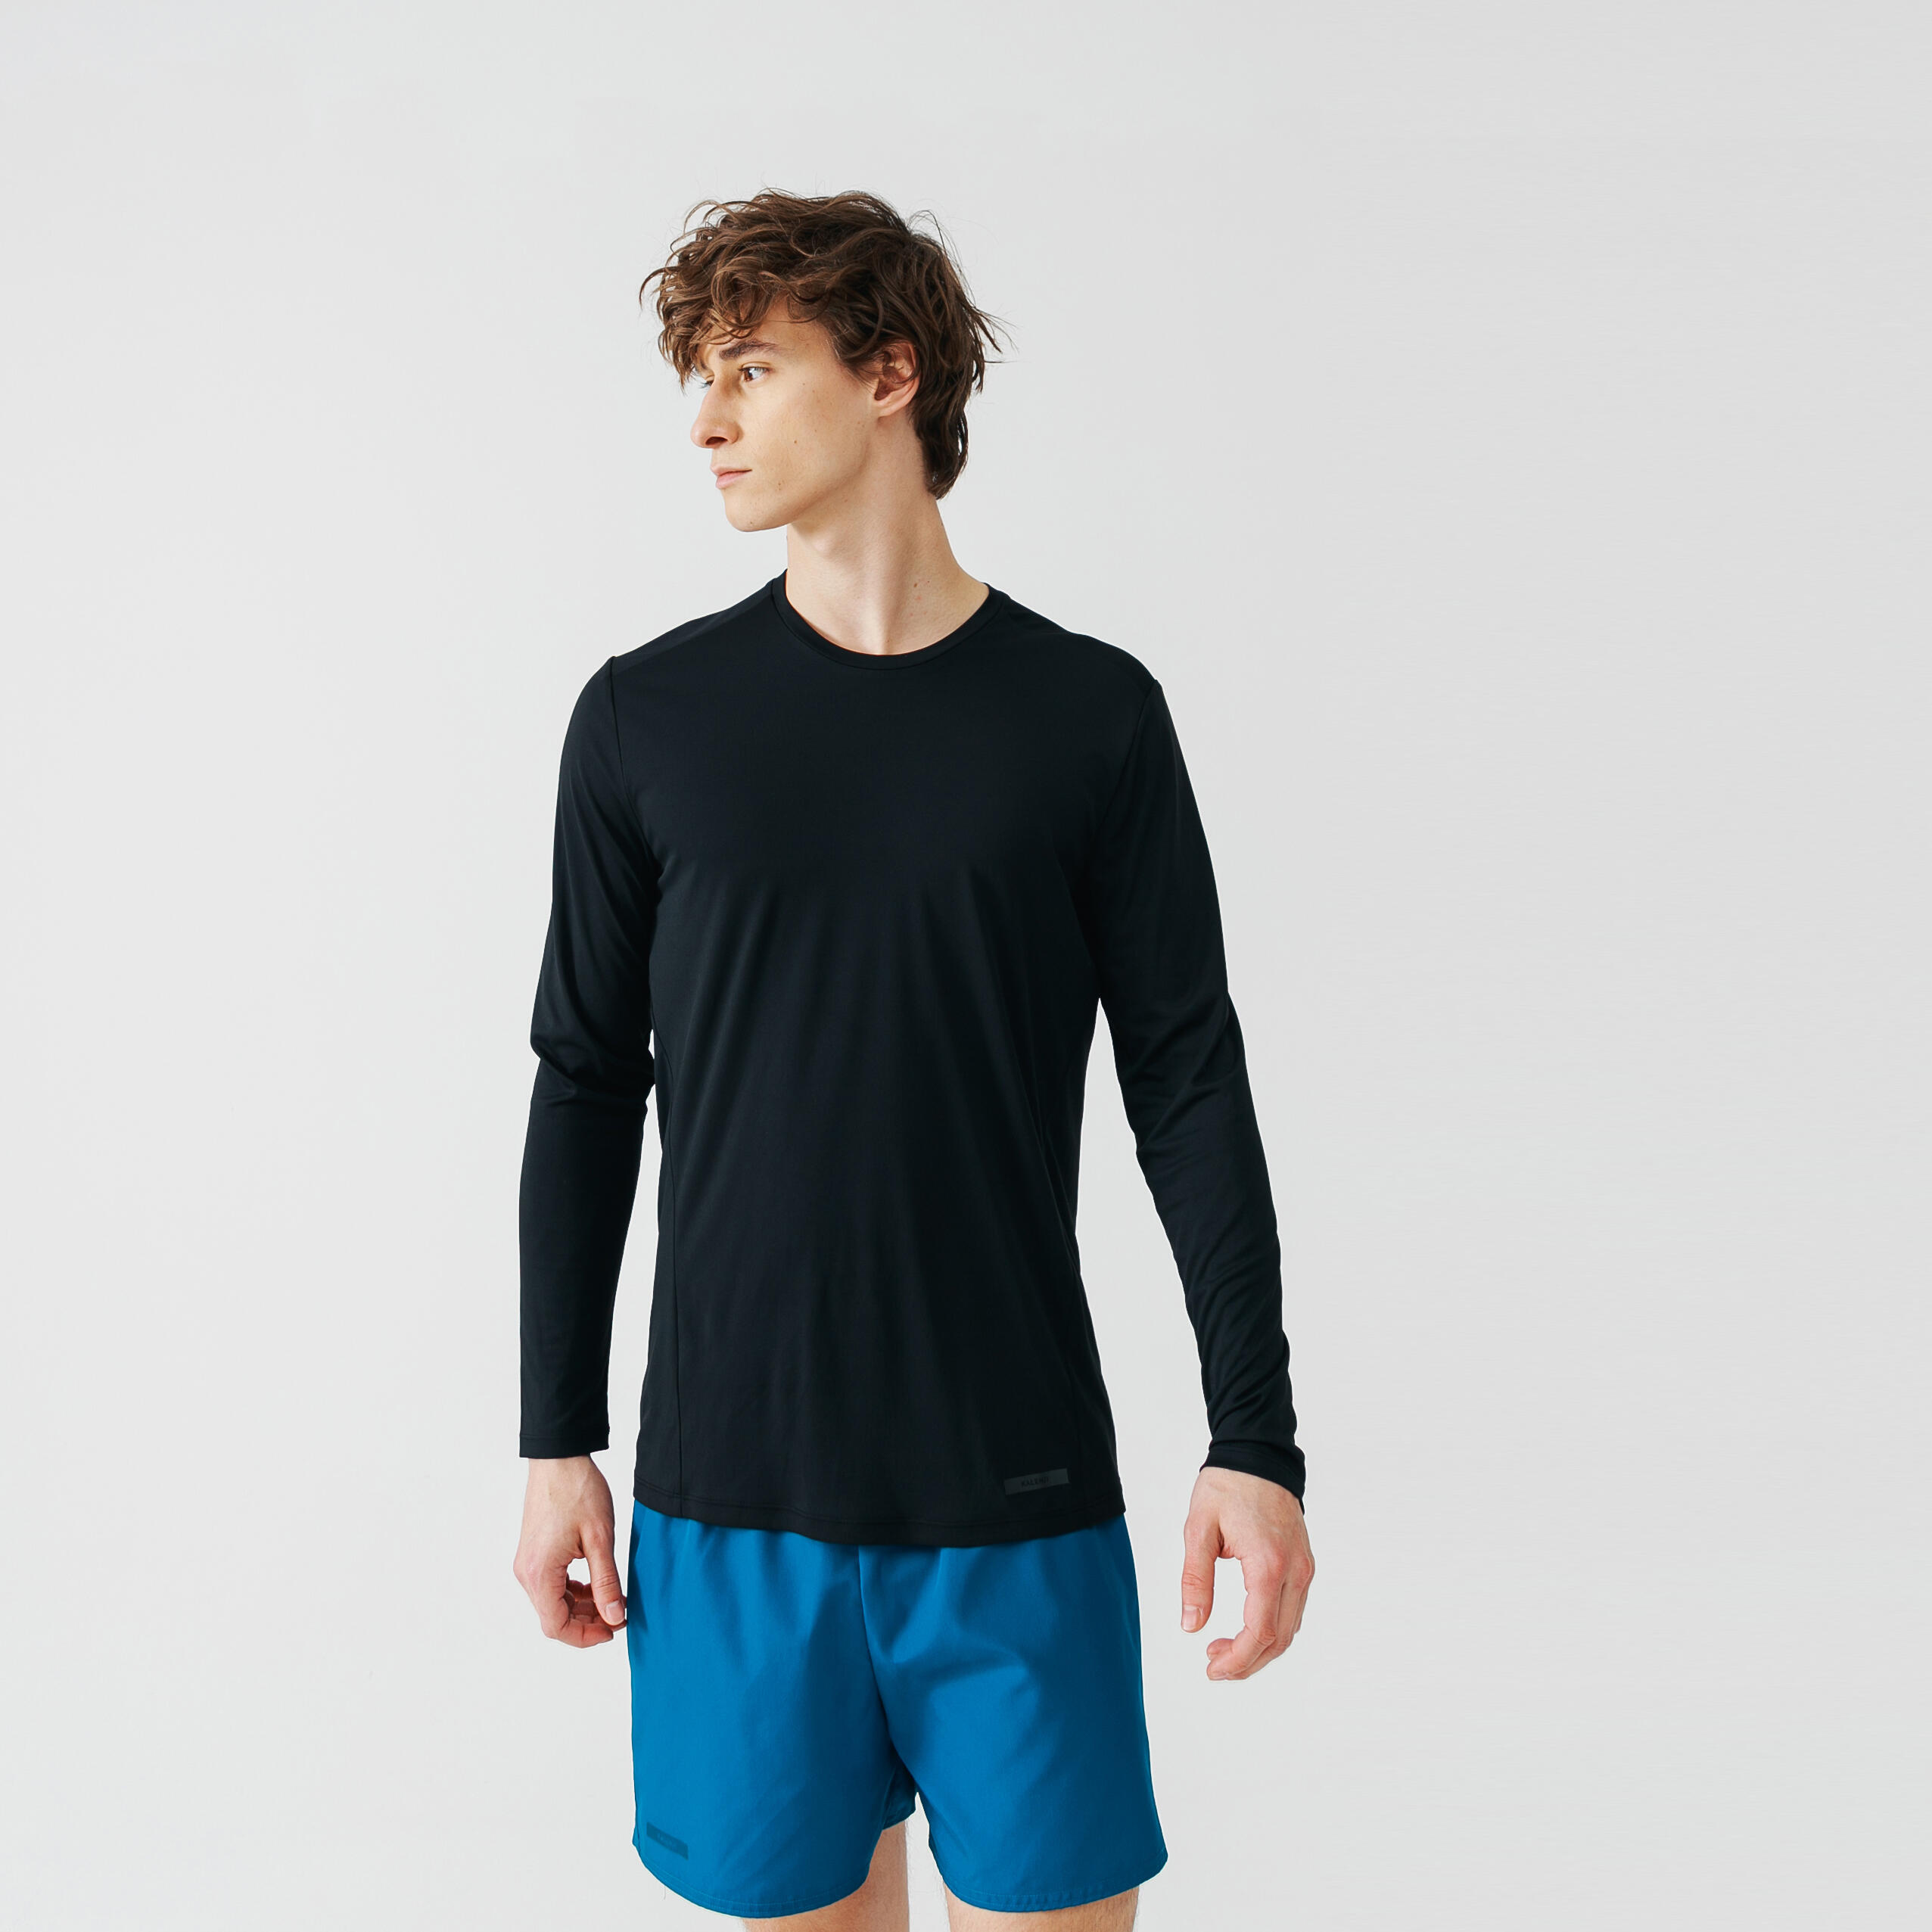 KALENJI Sun Protect men's breathable long-sleeved running T-shirt - black